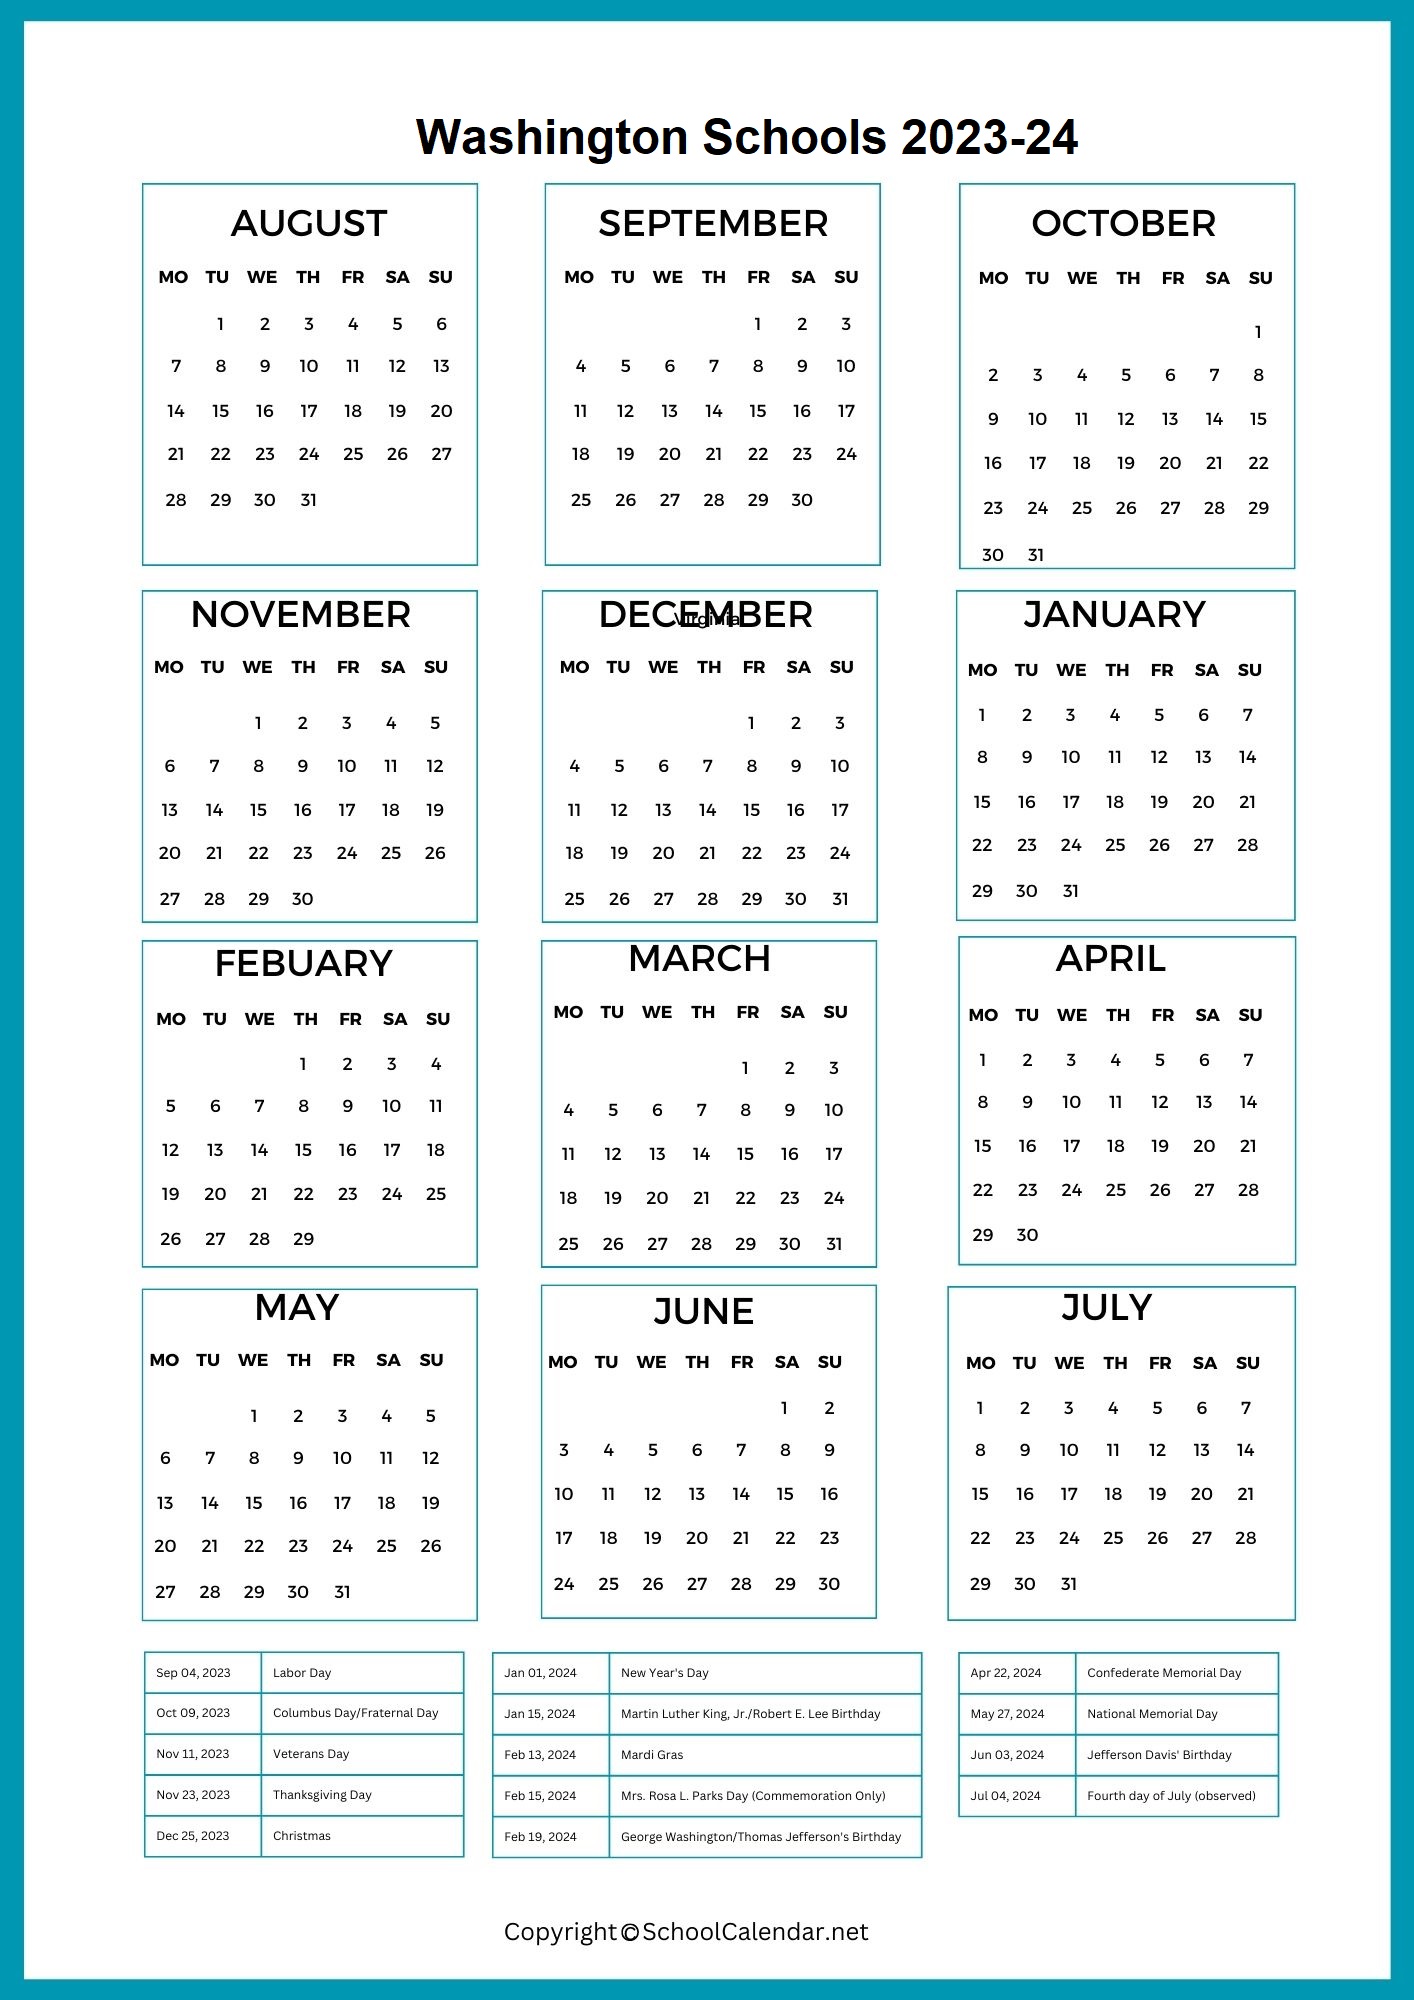 Washington School Holiday Calendar 2023